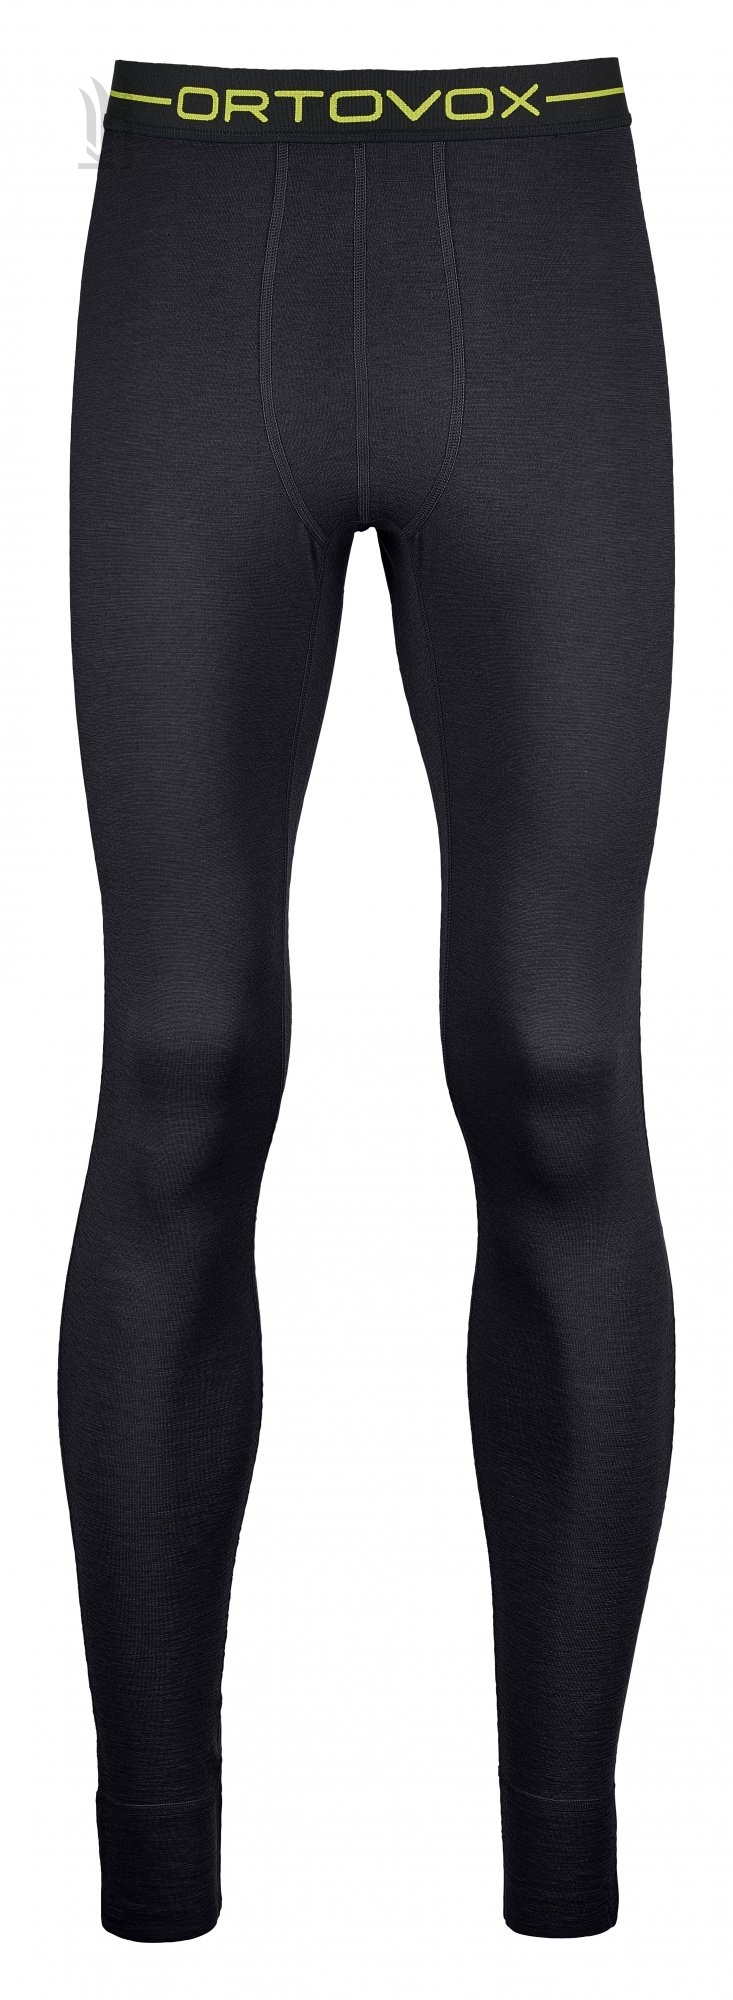 Ortovox 145 Ultra Long Pants Black Raven M (XL)